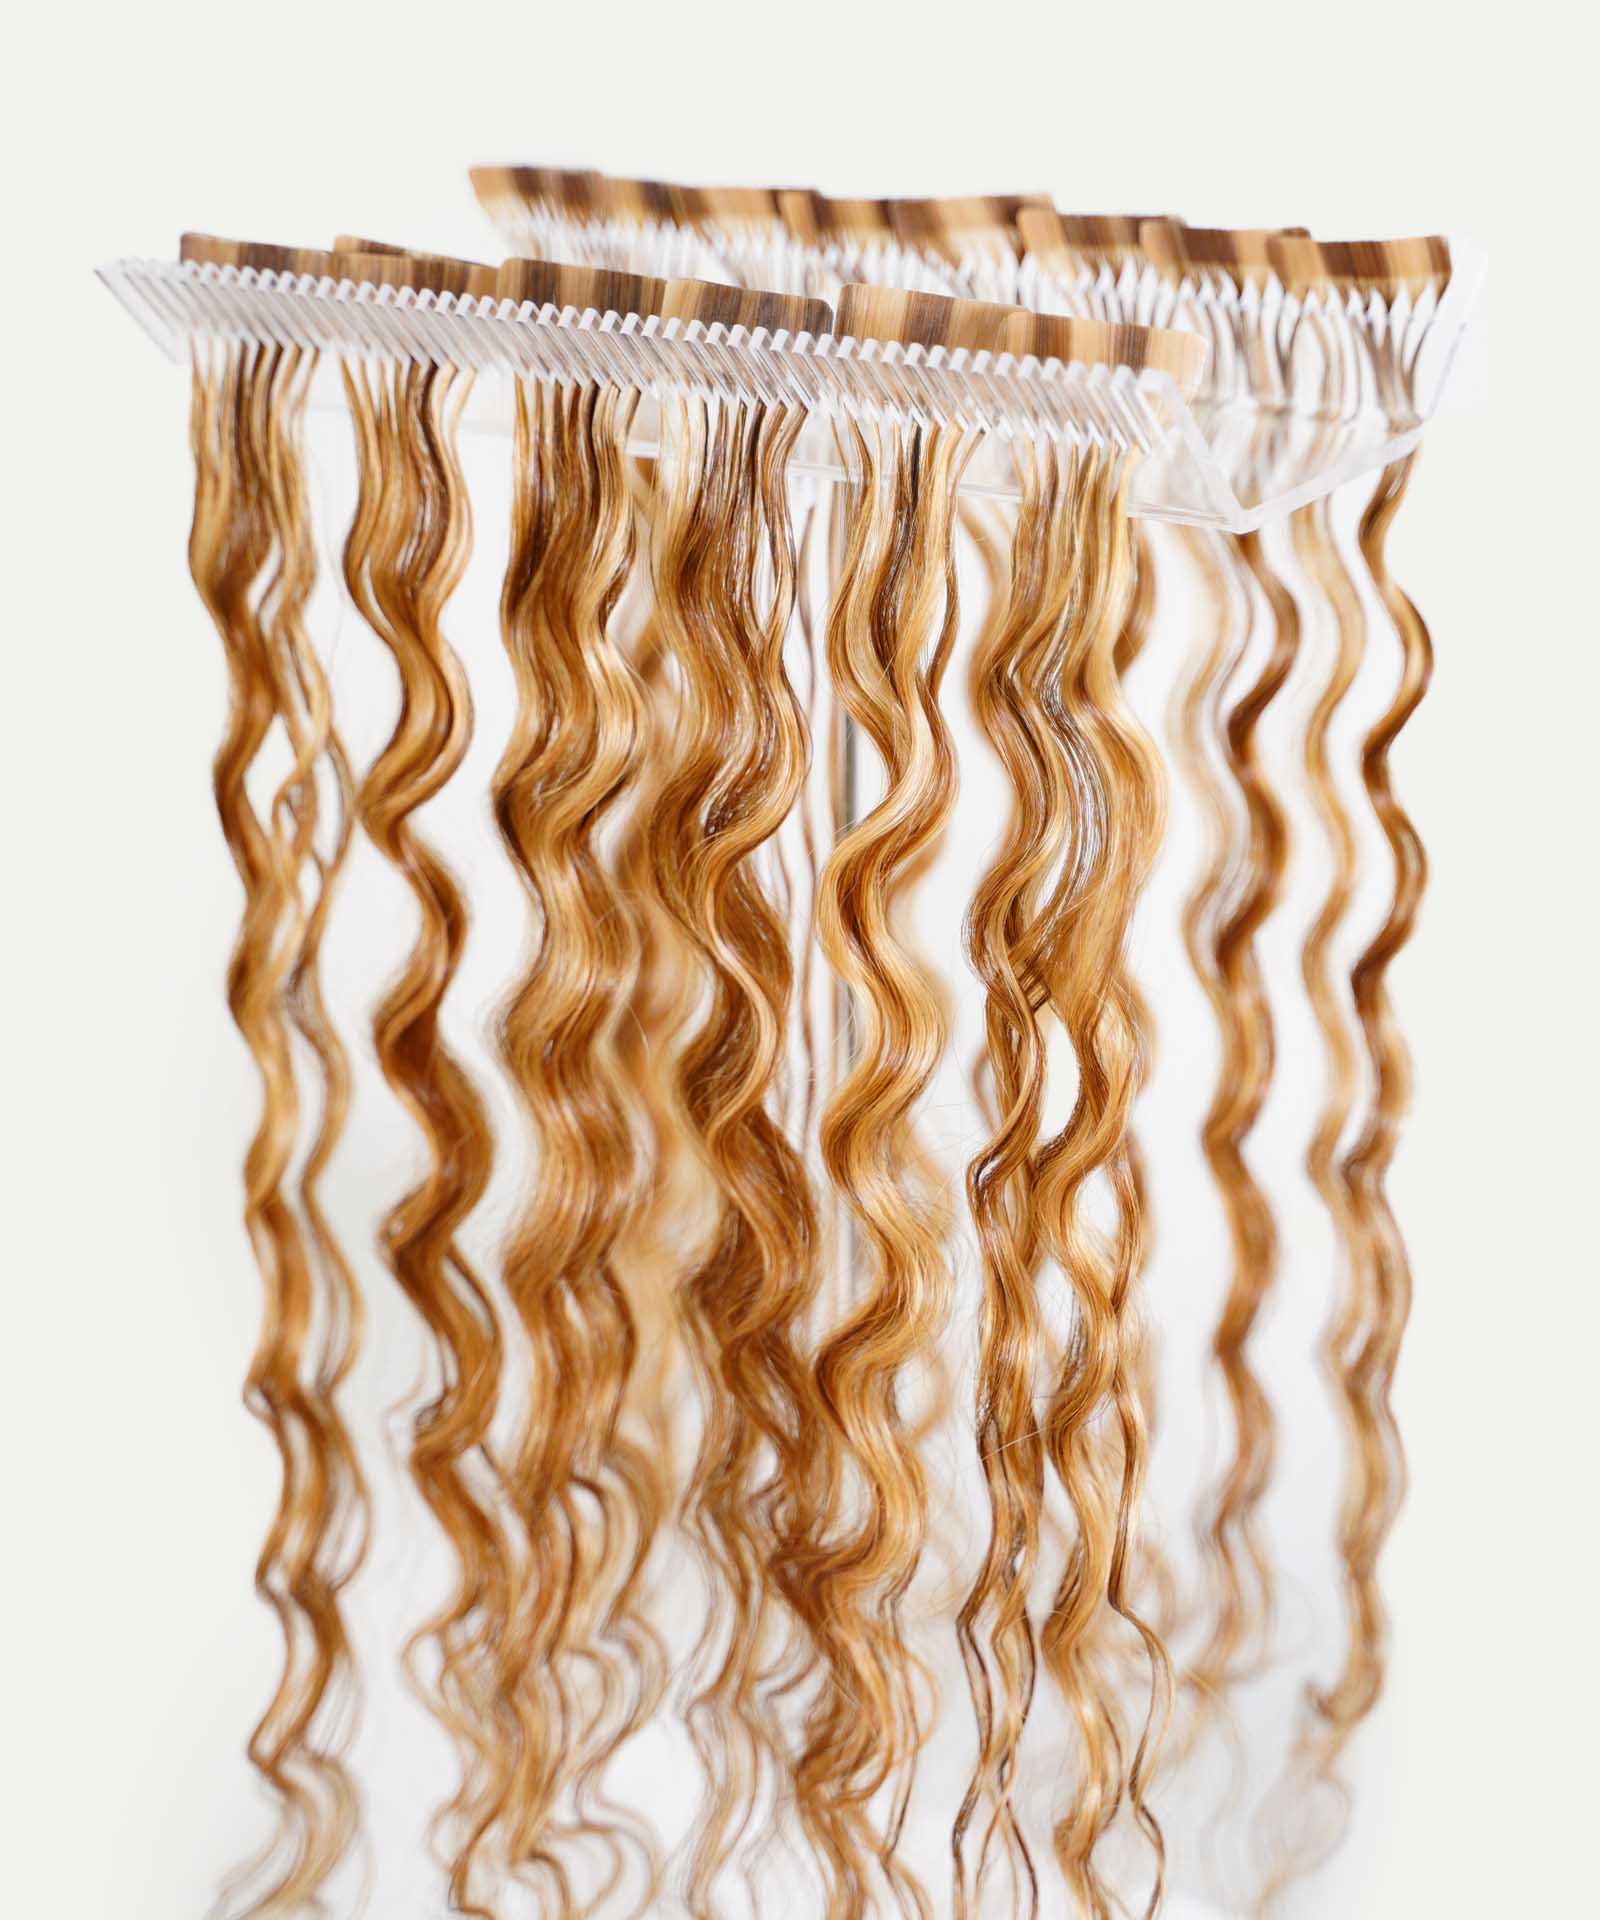 Custom Clear Acrylic Plexiglass Hair Extension Stand Organizer